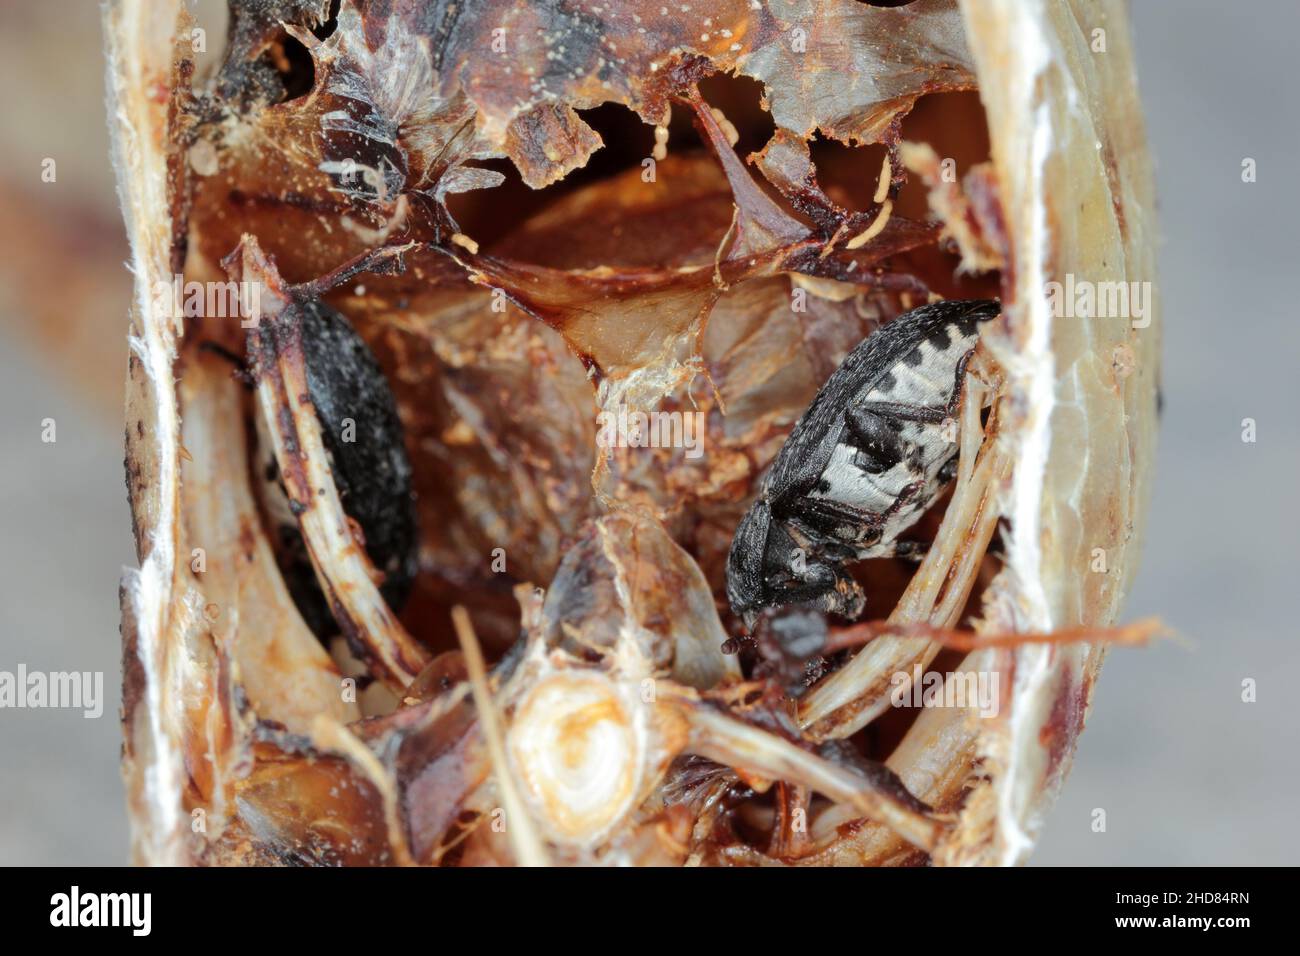 Dermestes murinus from the family Dermestidae a skin beetles. Beetle on dead fish. Stock Photo